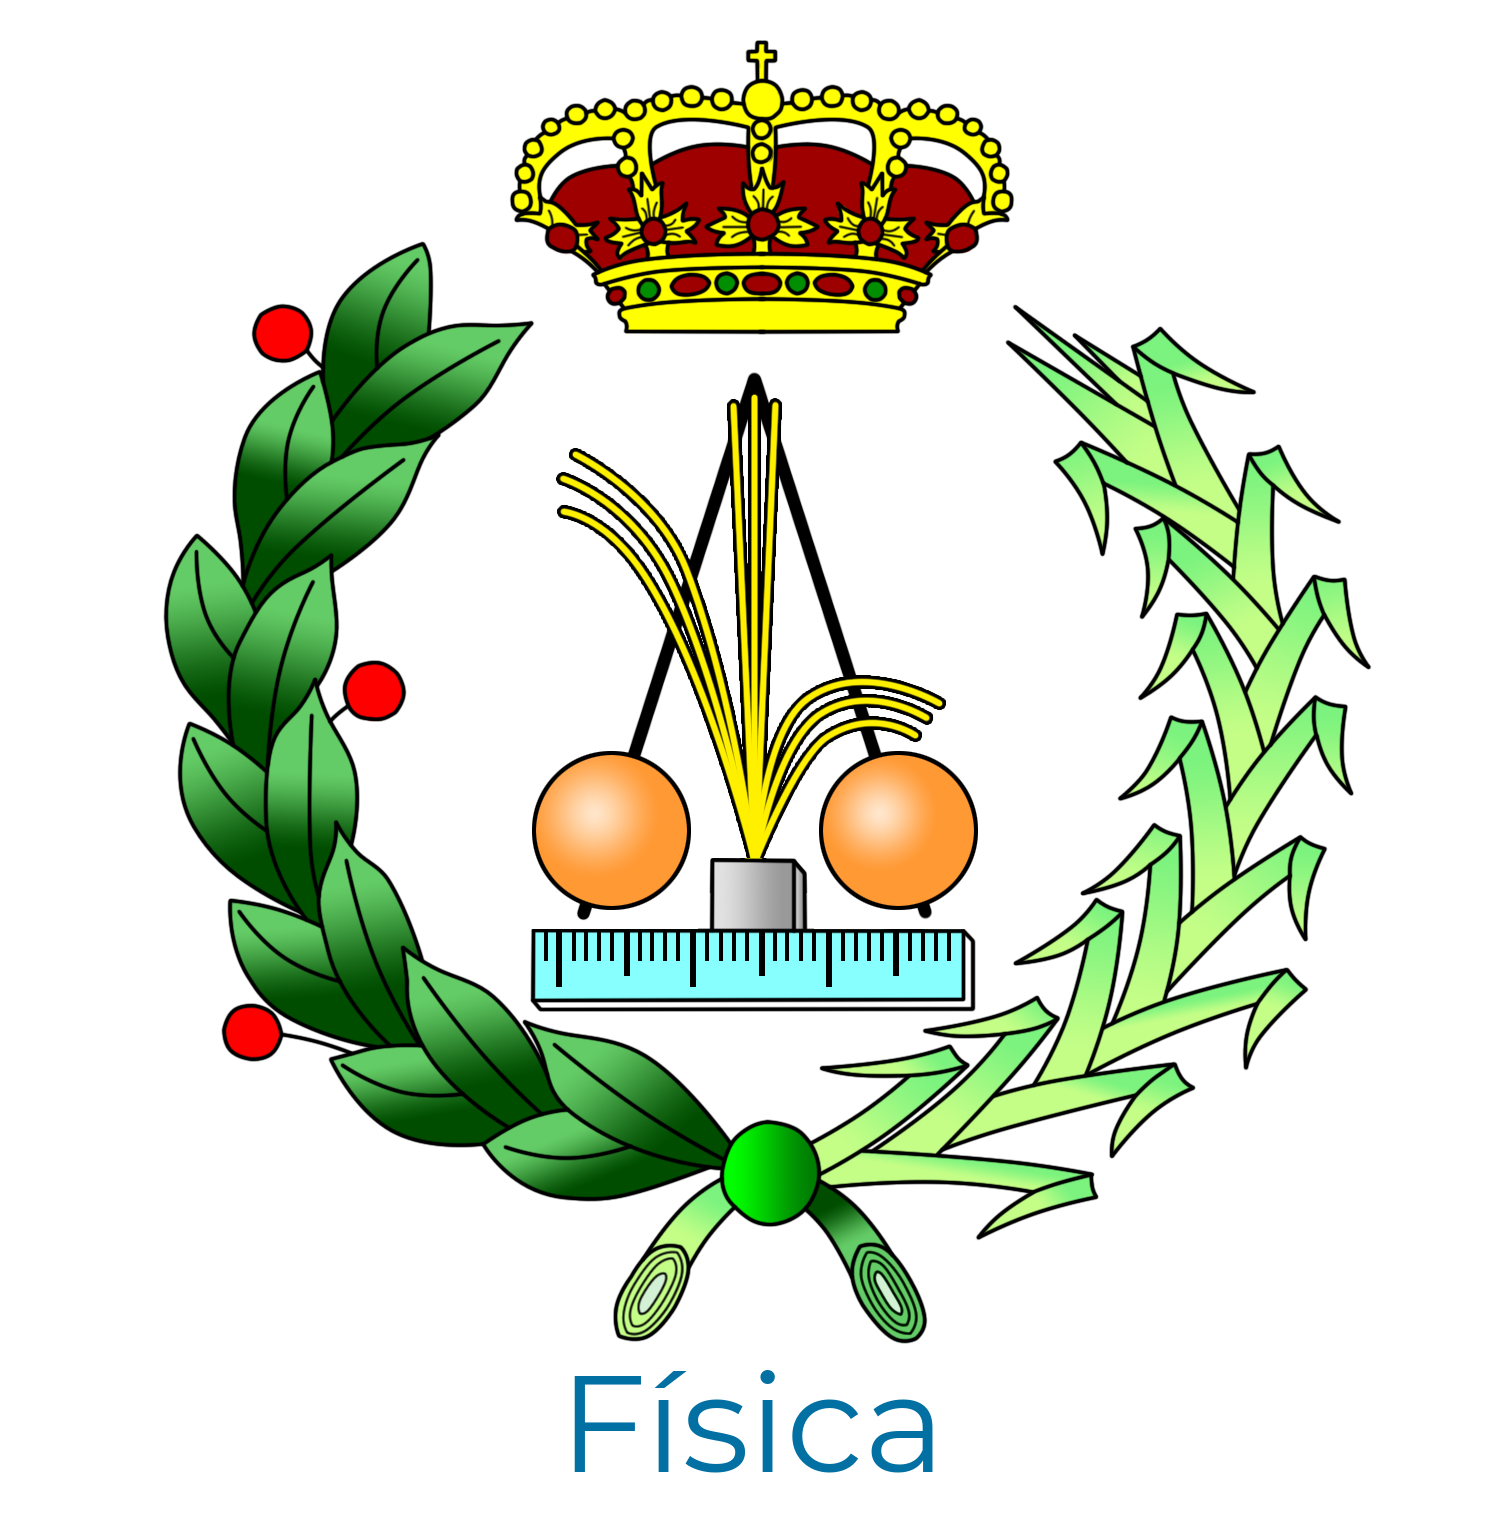 Fisica logo